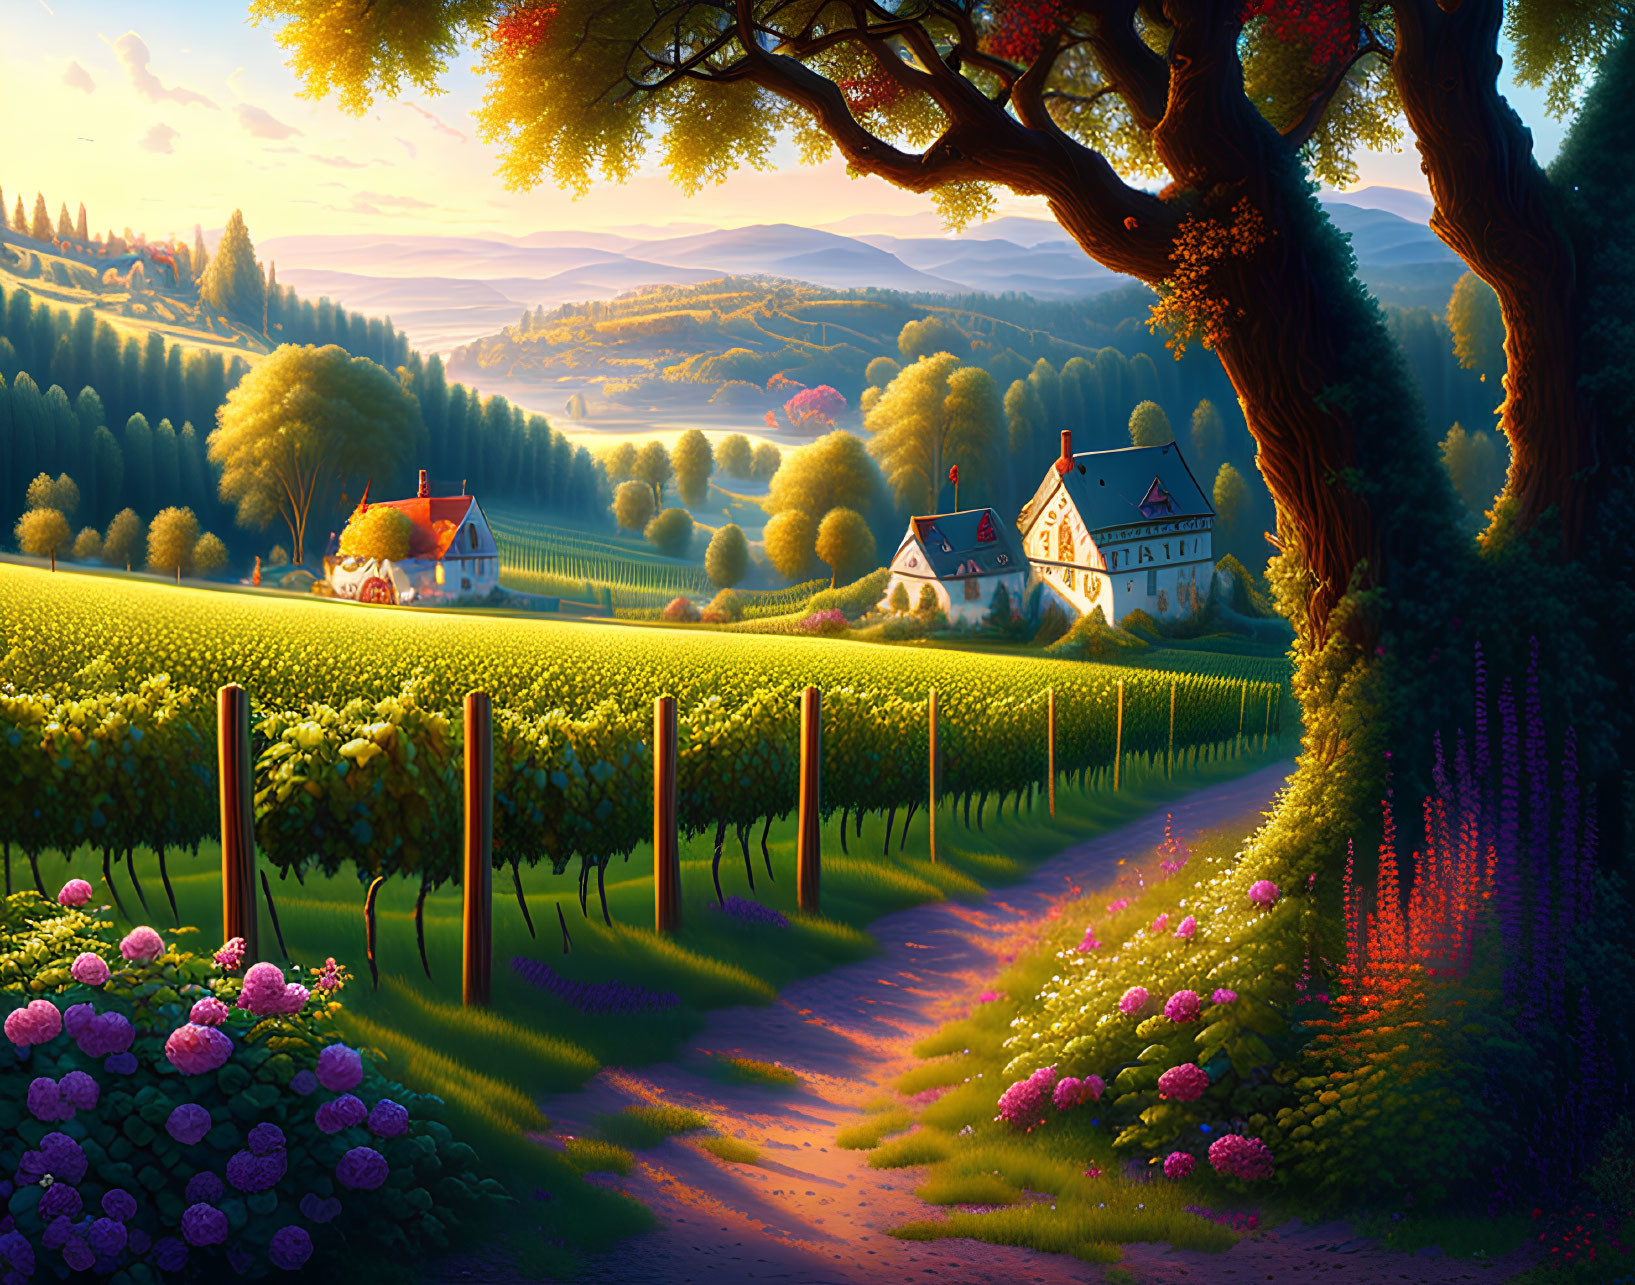 Silent Sunset over the Winegard Landscape